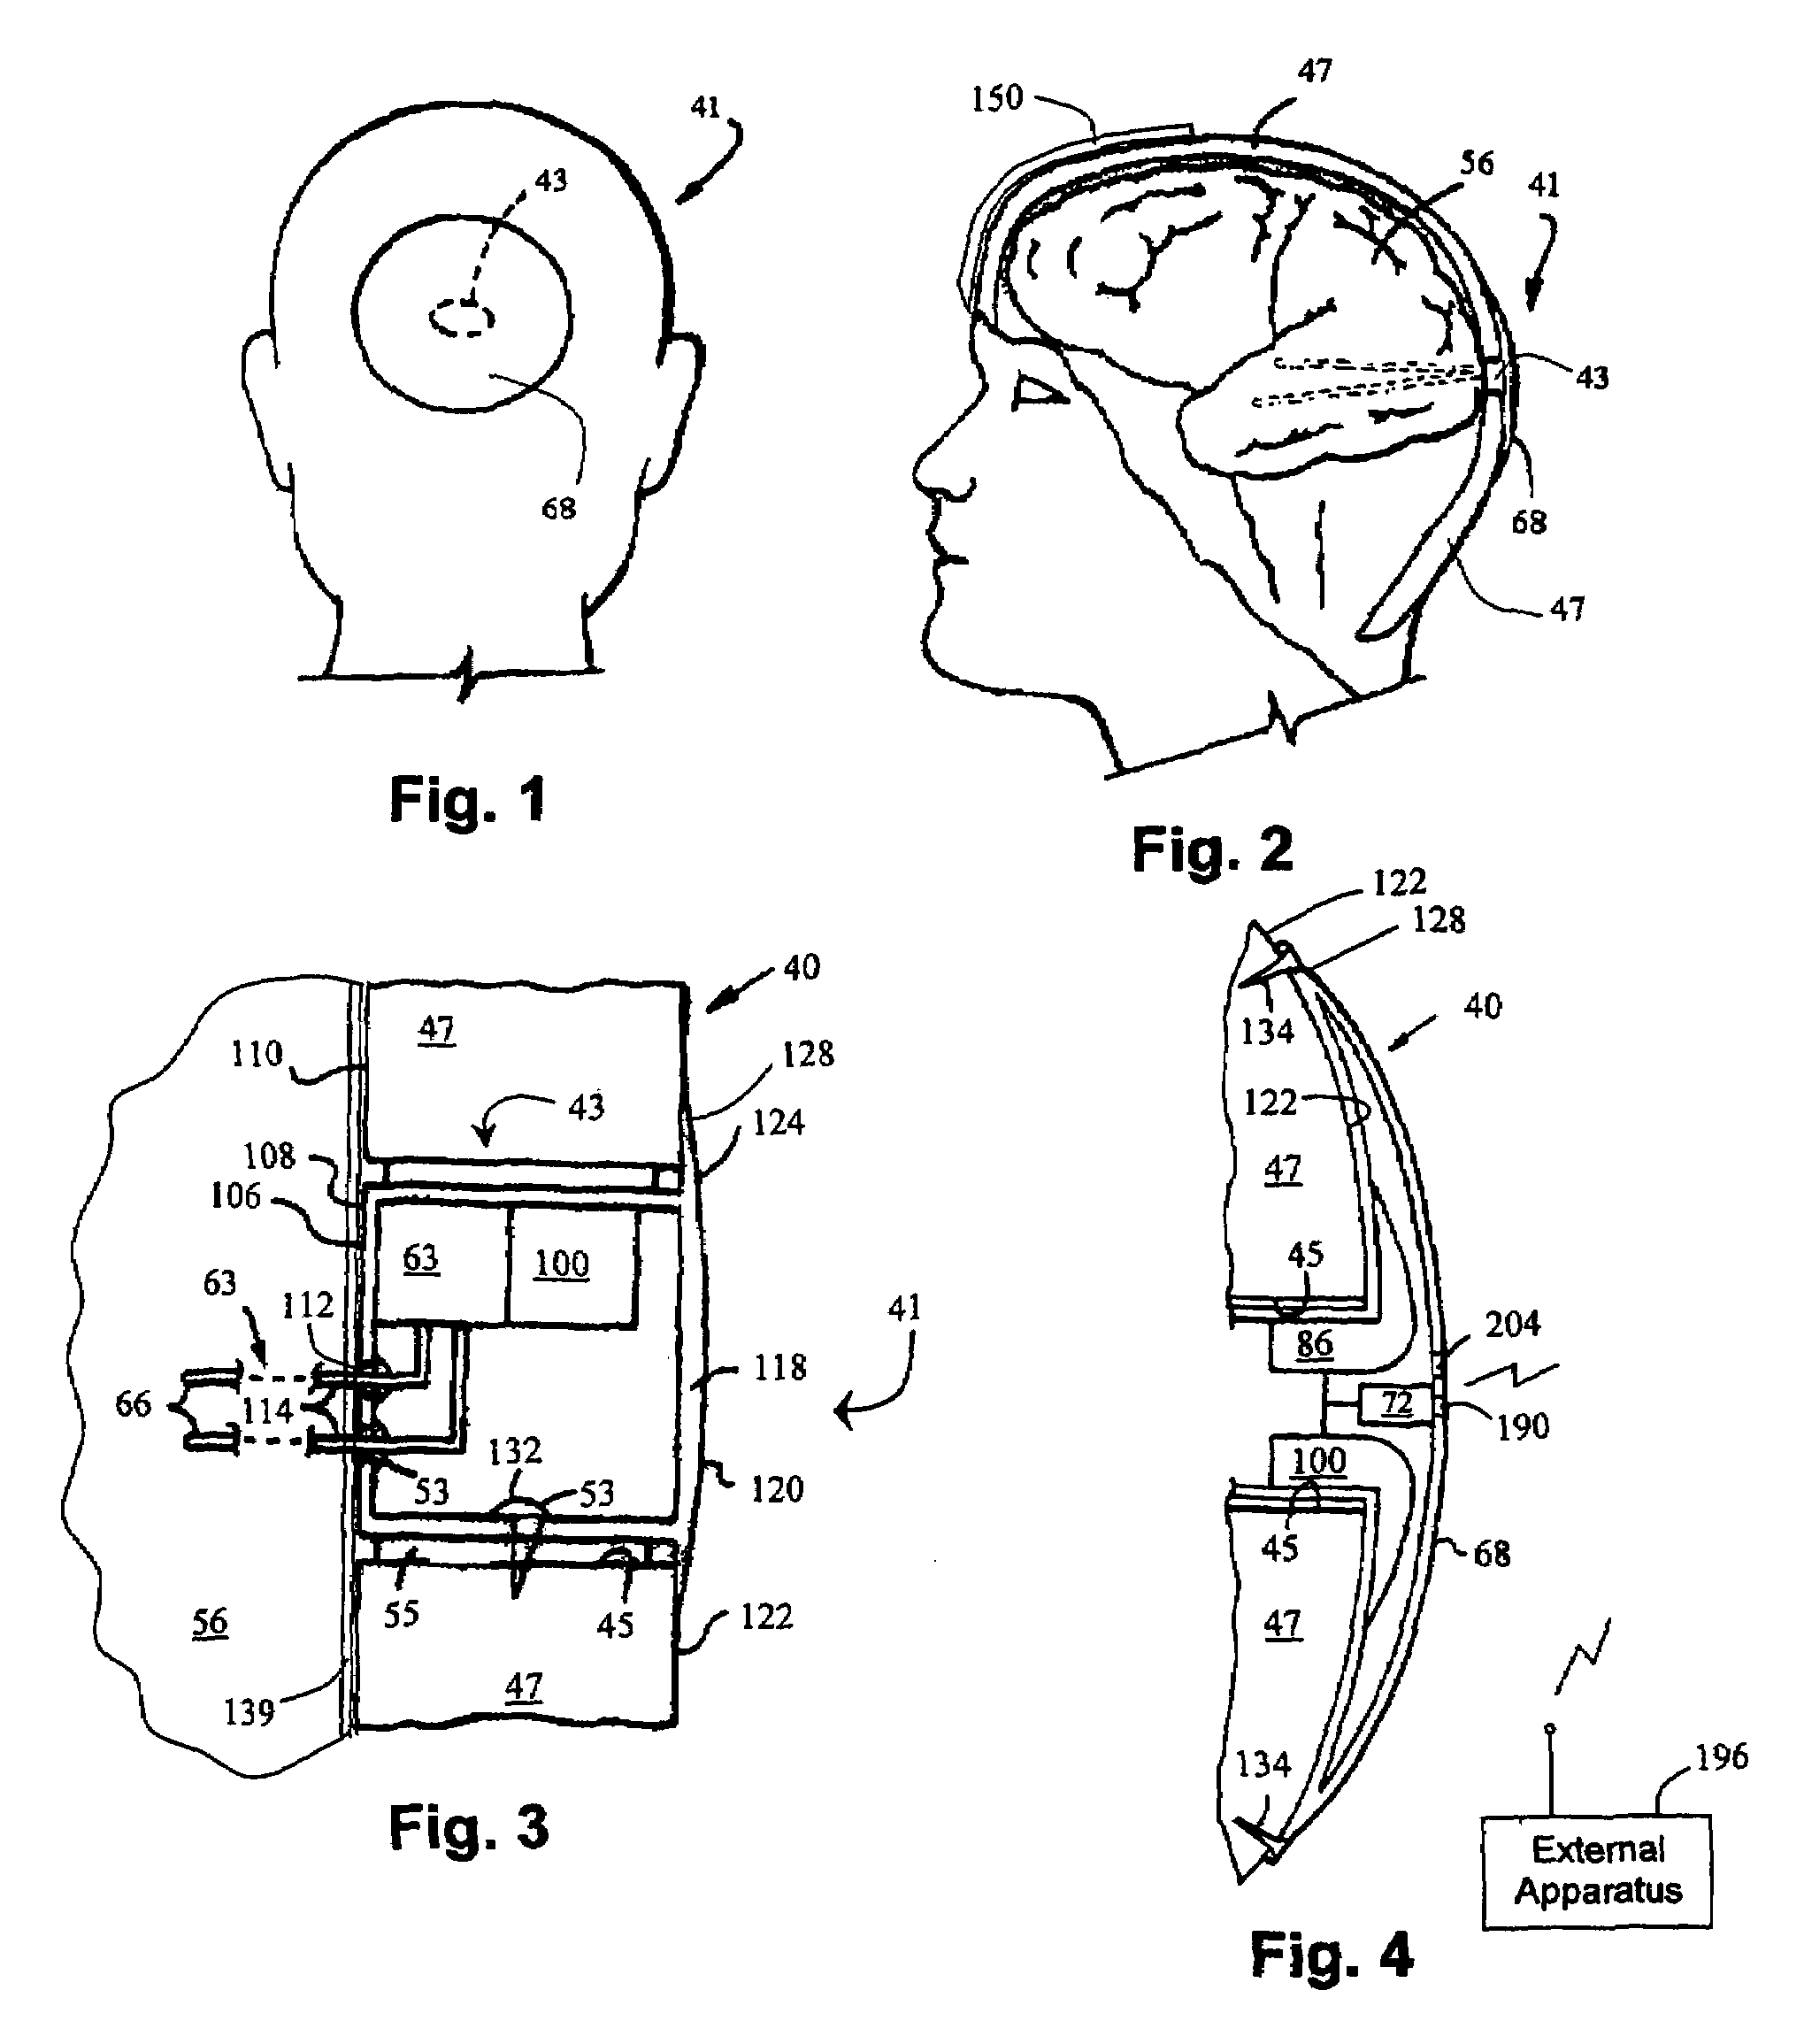 Cerebral or organ interface system